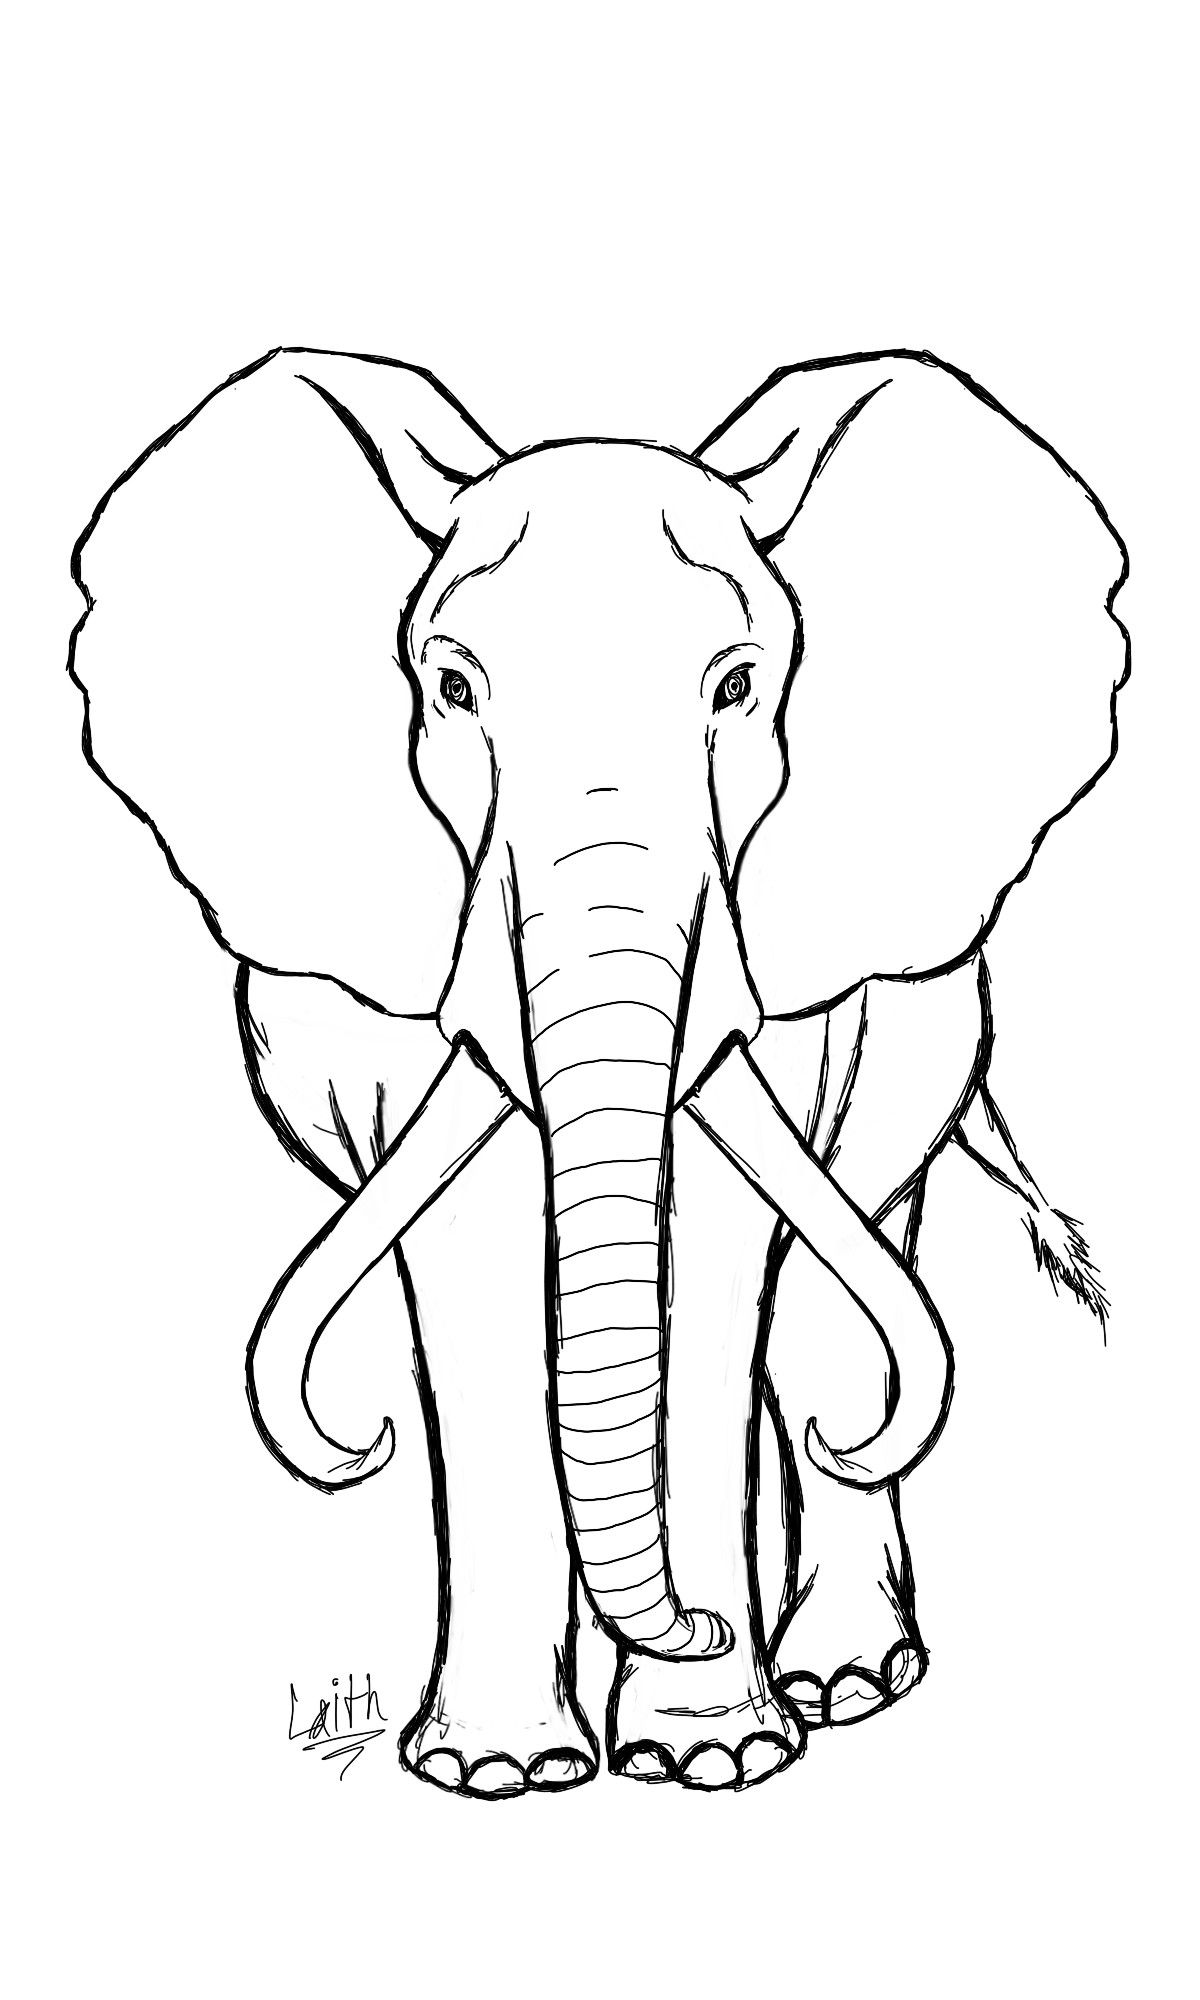 Contoh Gambar Sketsa Gajah